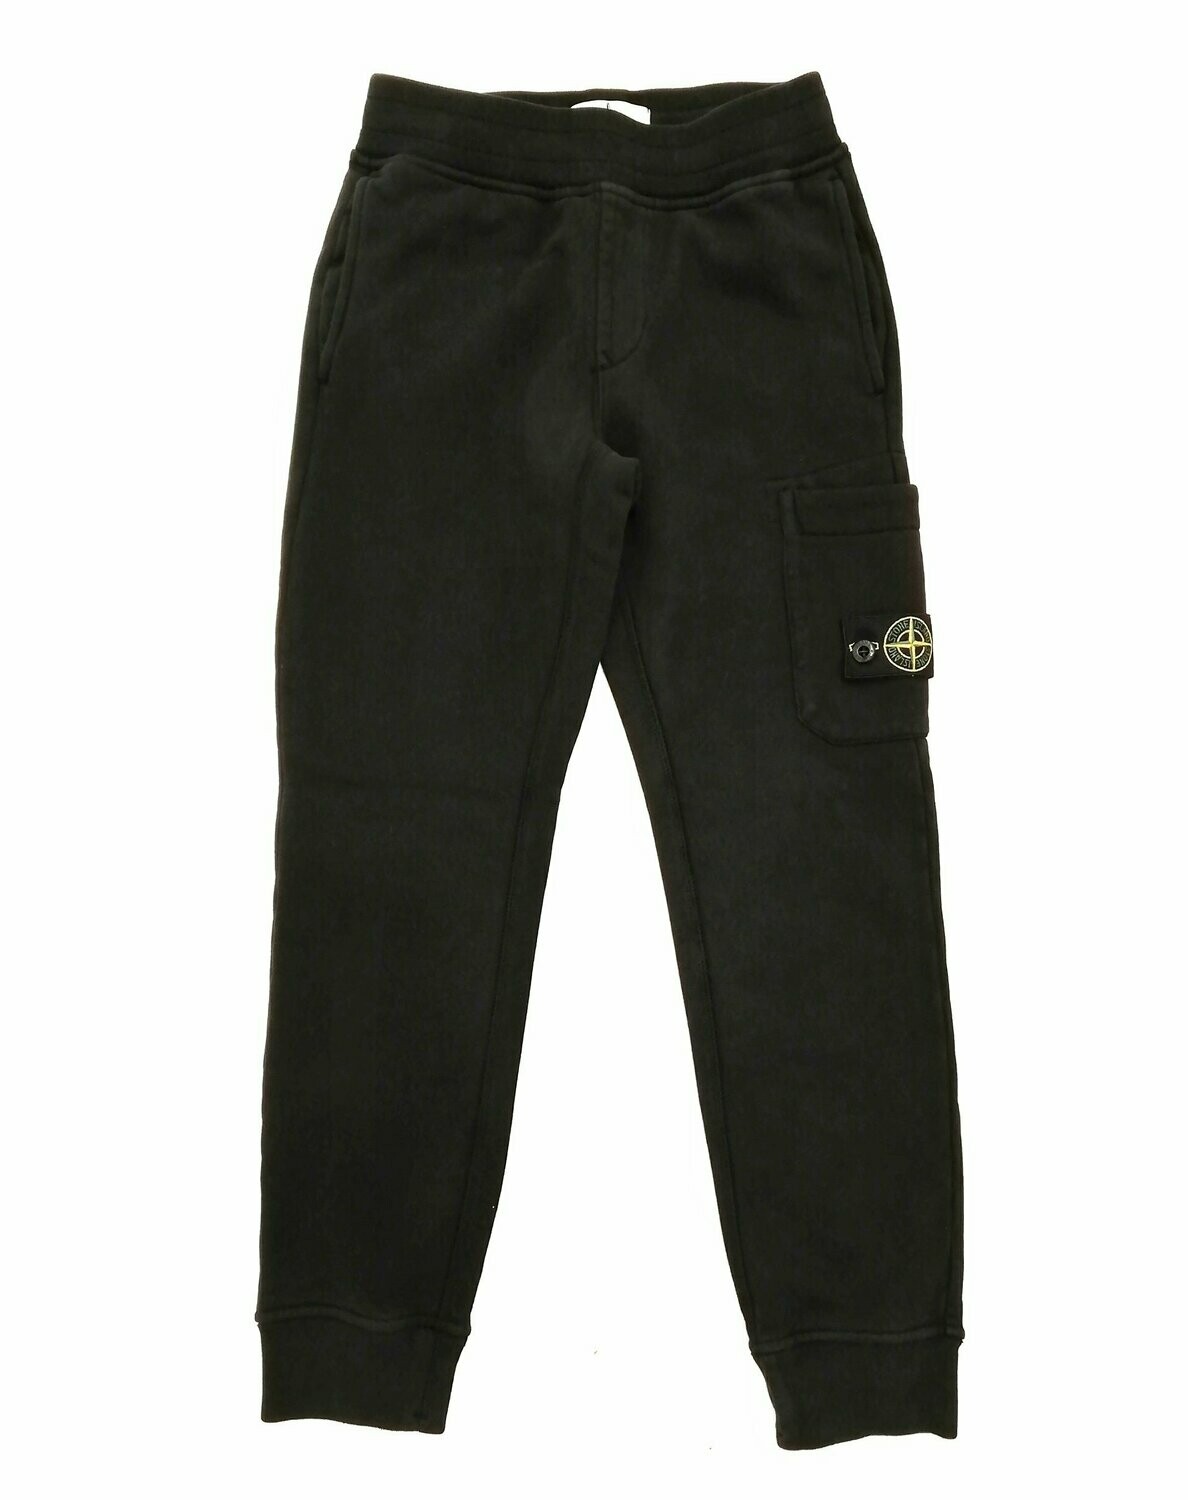 Stone Island - Pantalone felpa nero felpato, Size: 6 anni